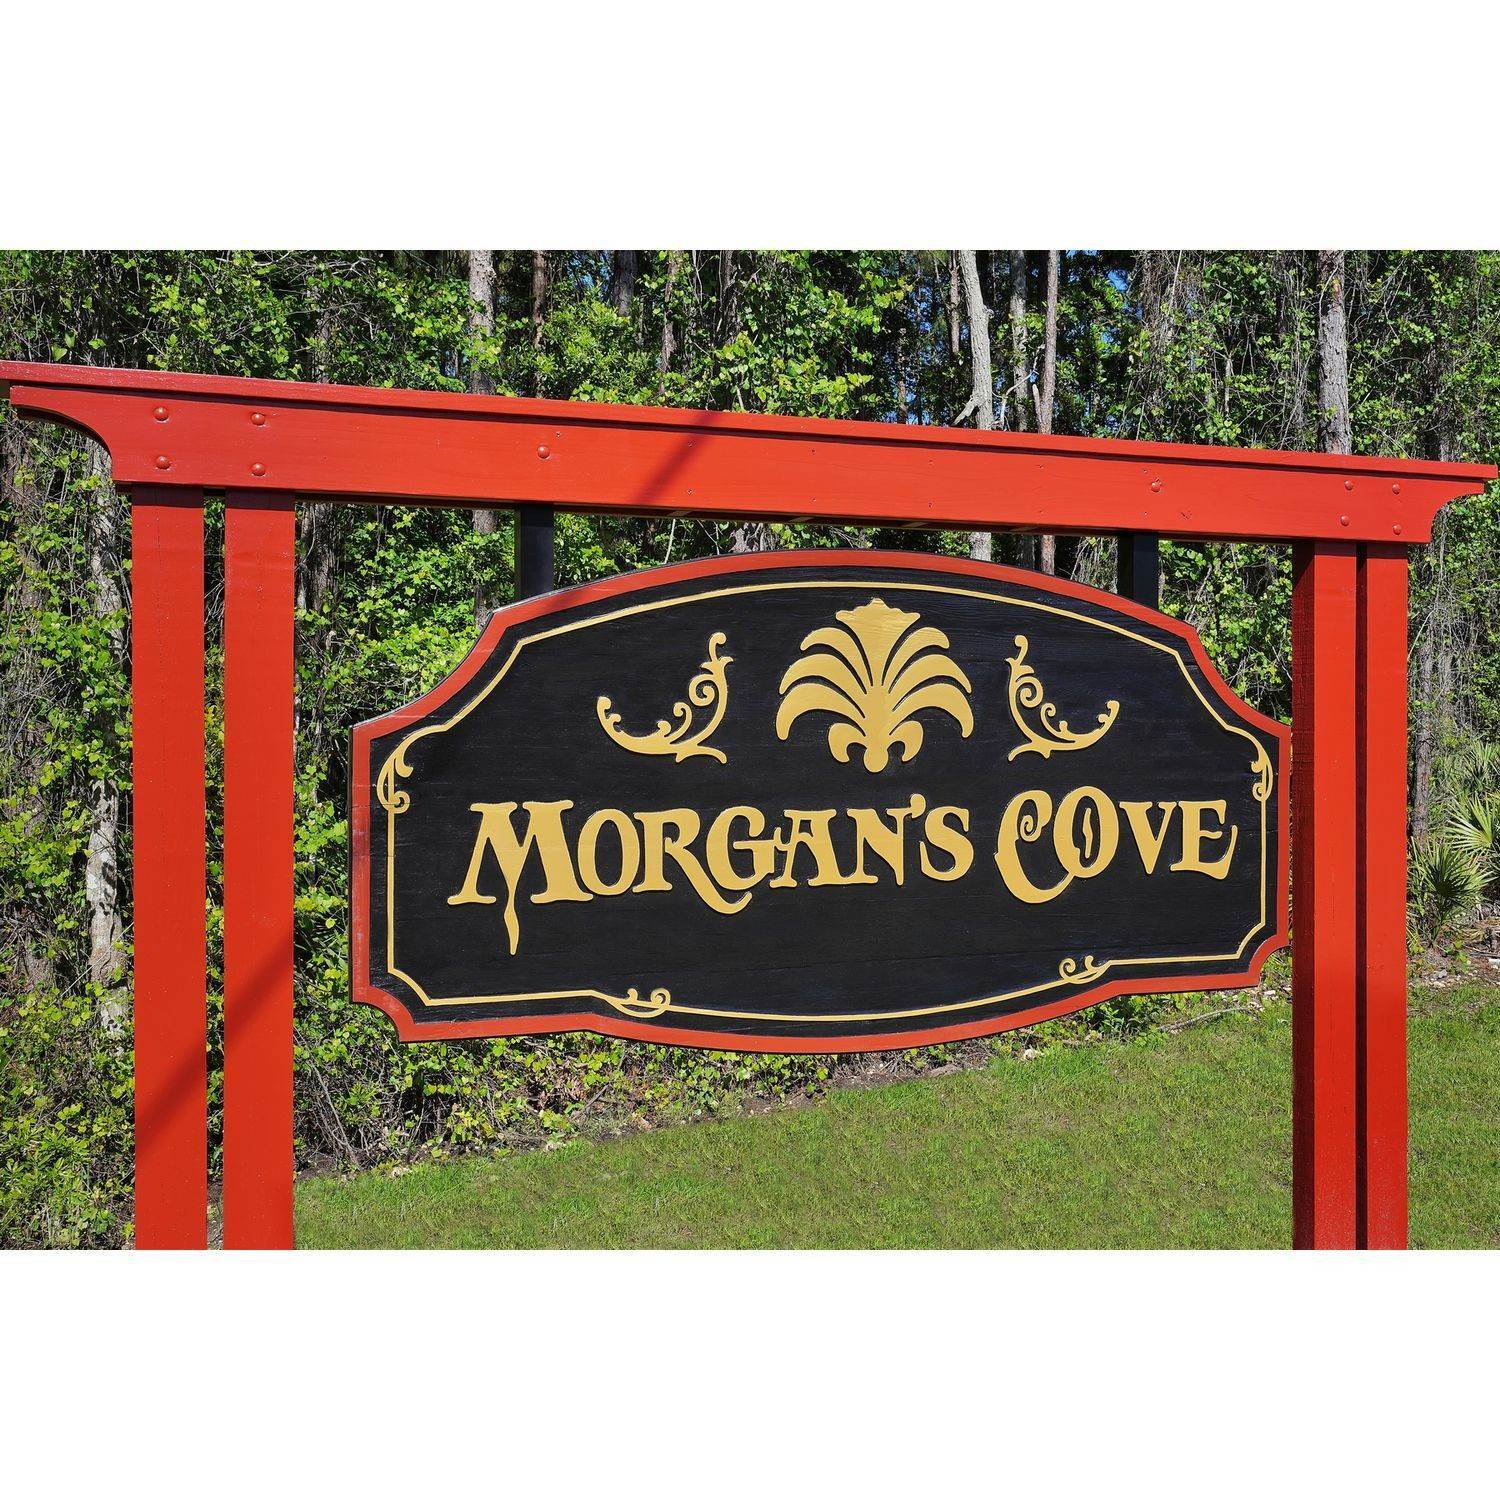 2. Morgan's Cove xây dựng tại 35 Mango Grove Court, St. Augustine, FL 32084